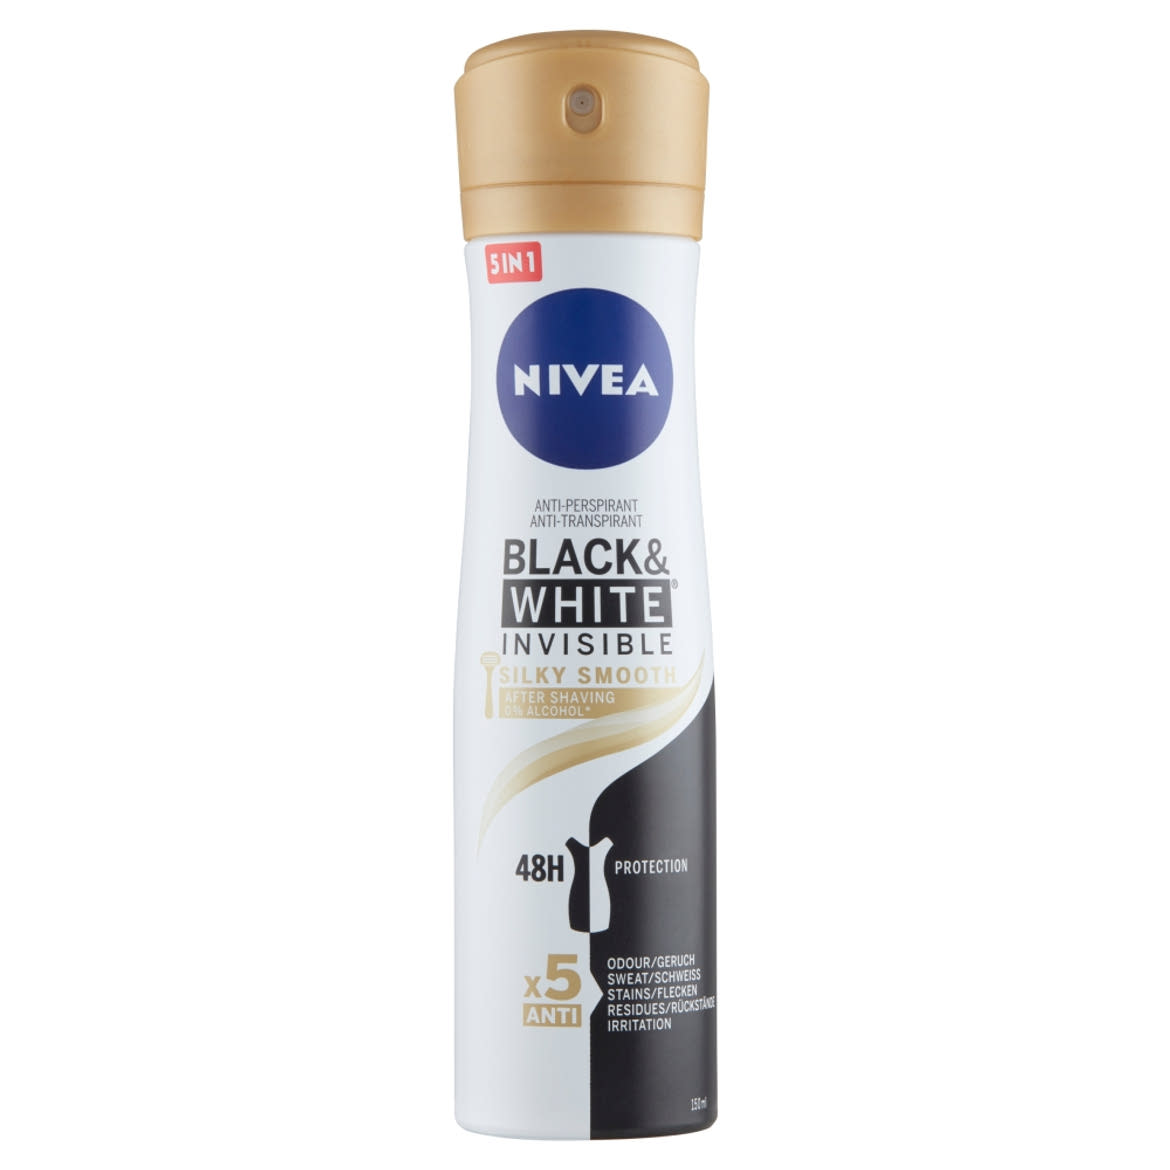 NIVEA Black & White Invisible Silky Smooth deo spray